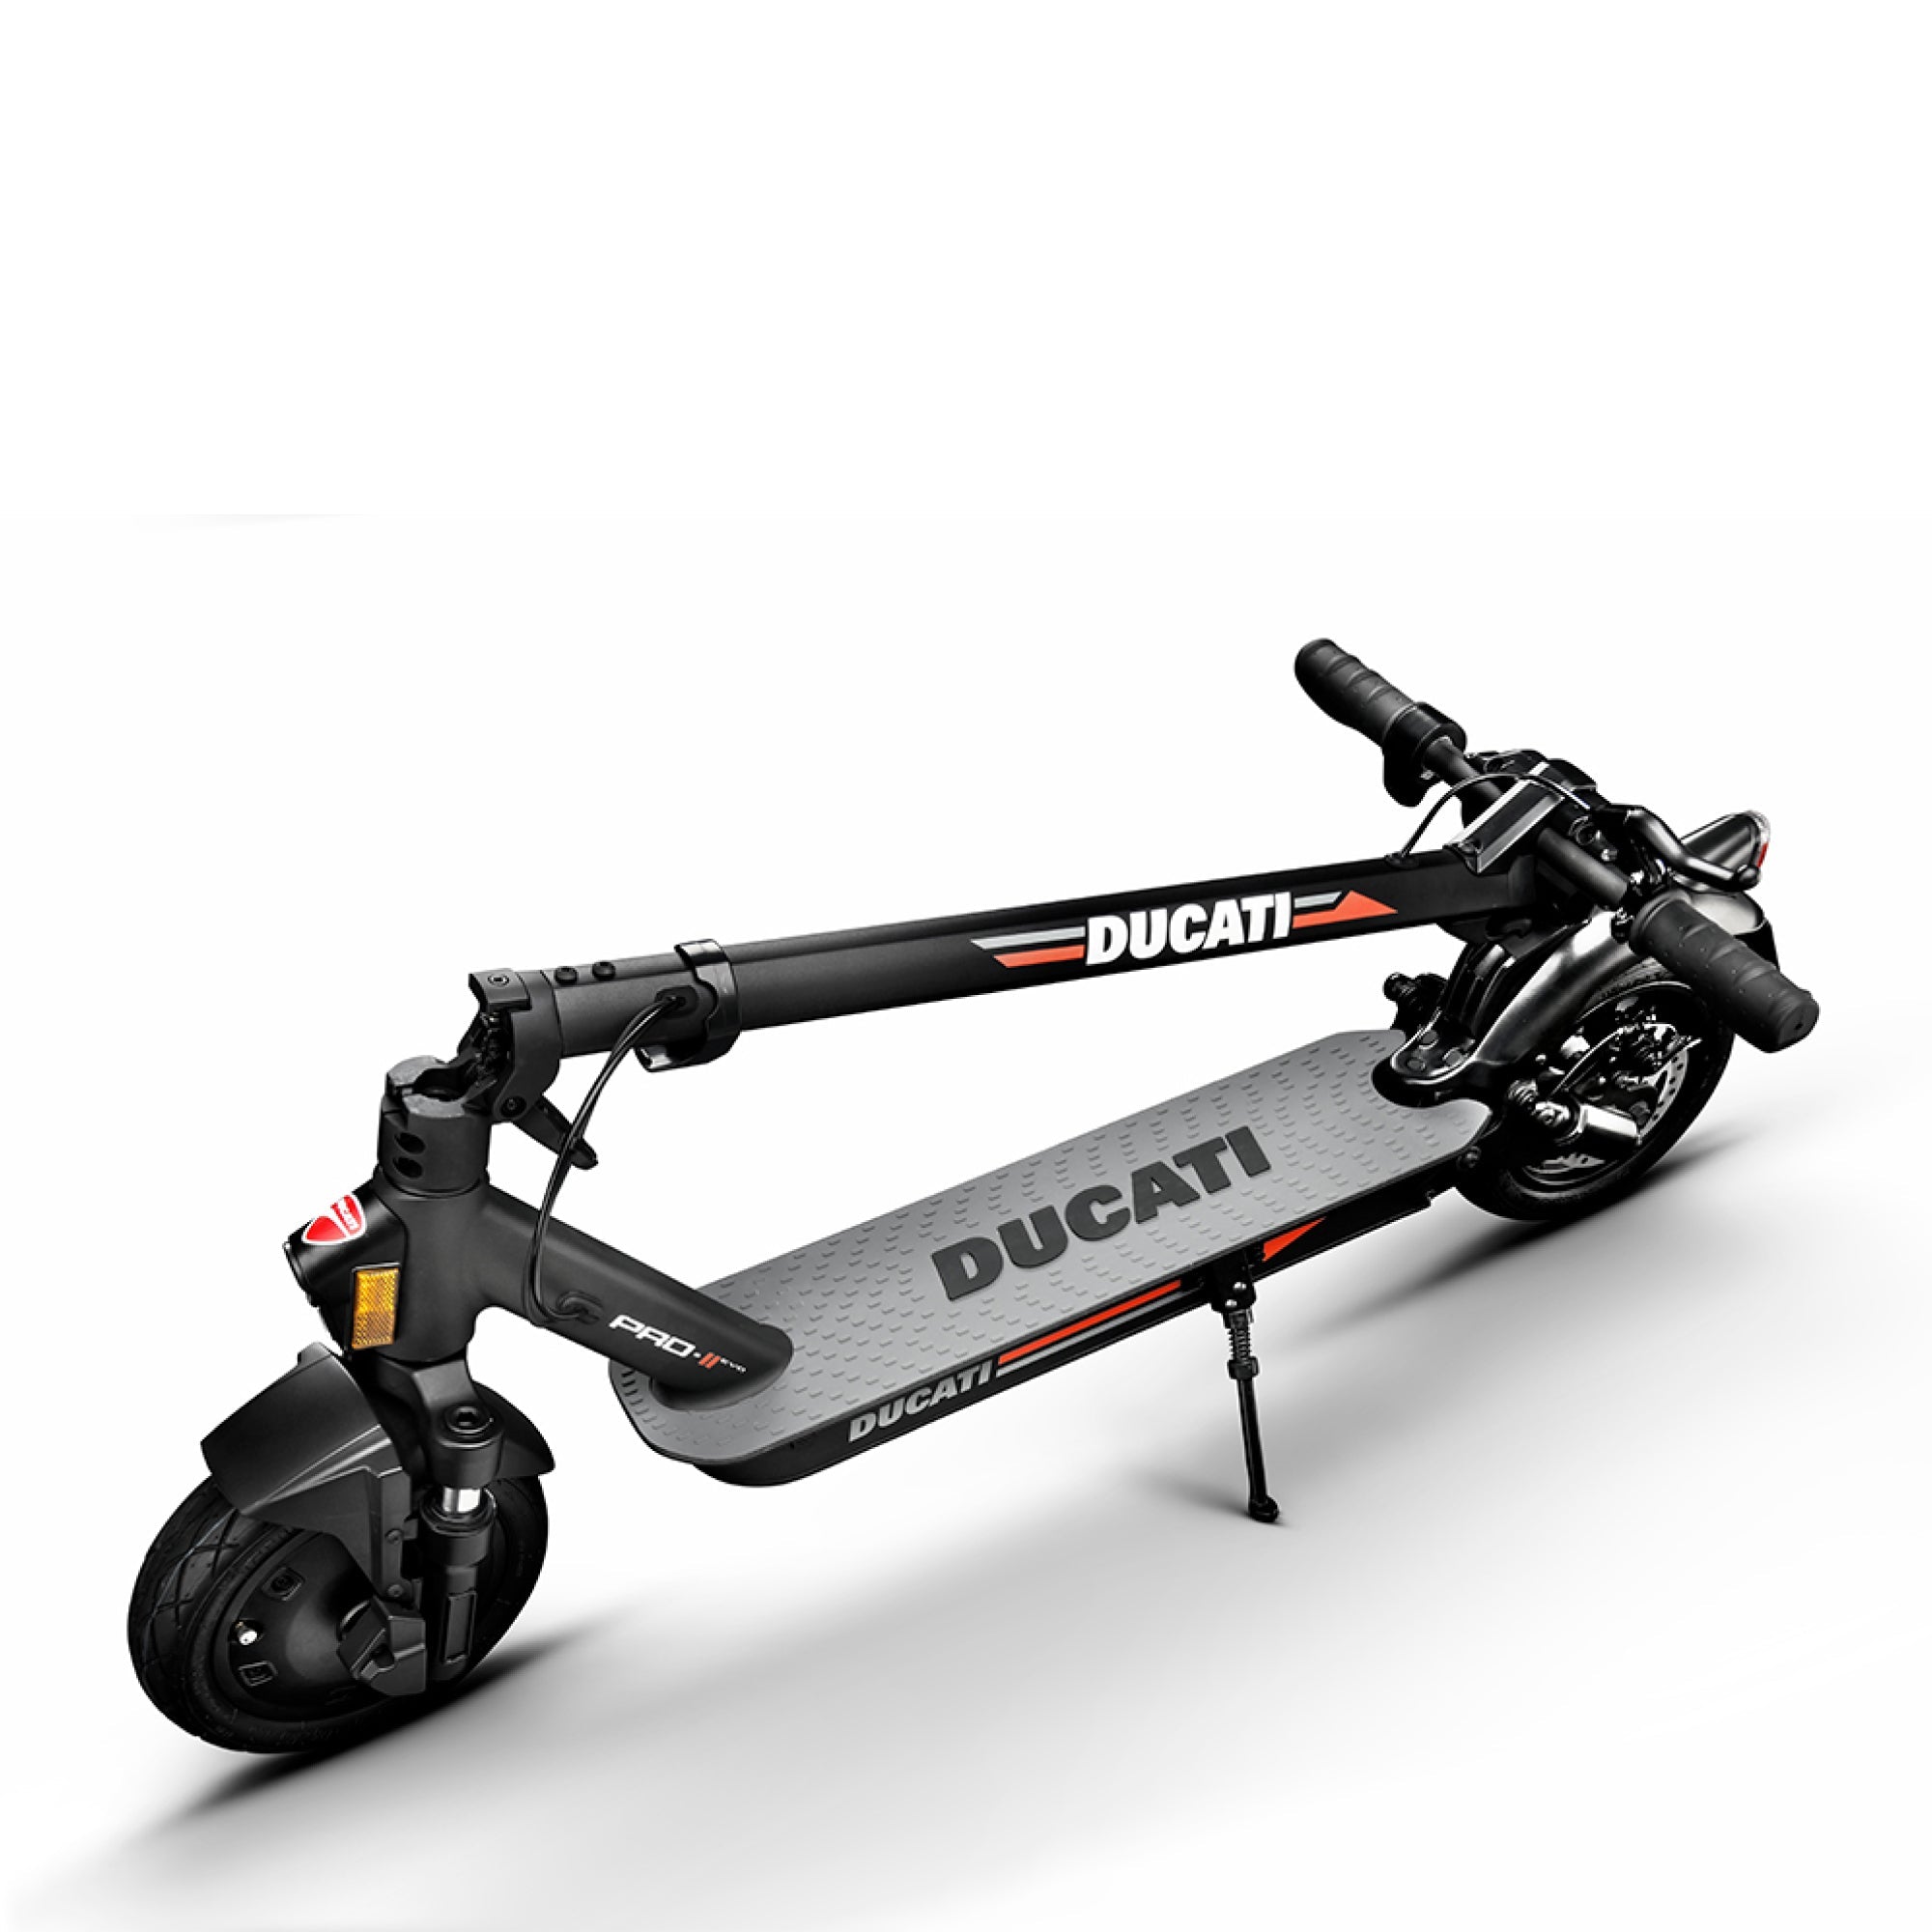 Ducati Elektrische Step Pro 2 Evo - 7CHOCO-